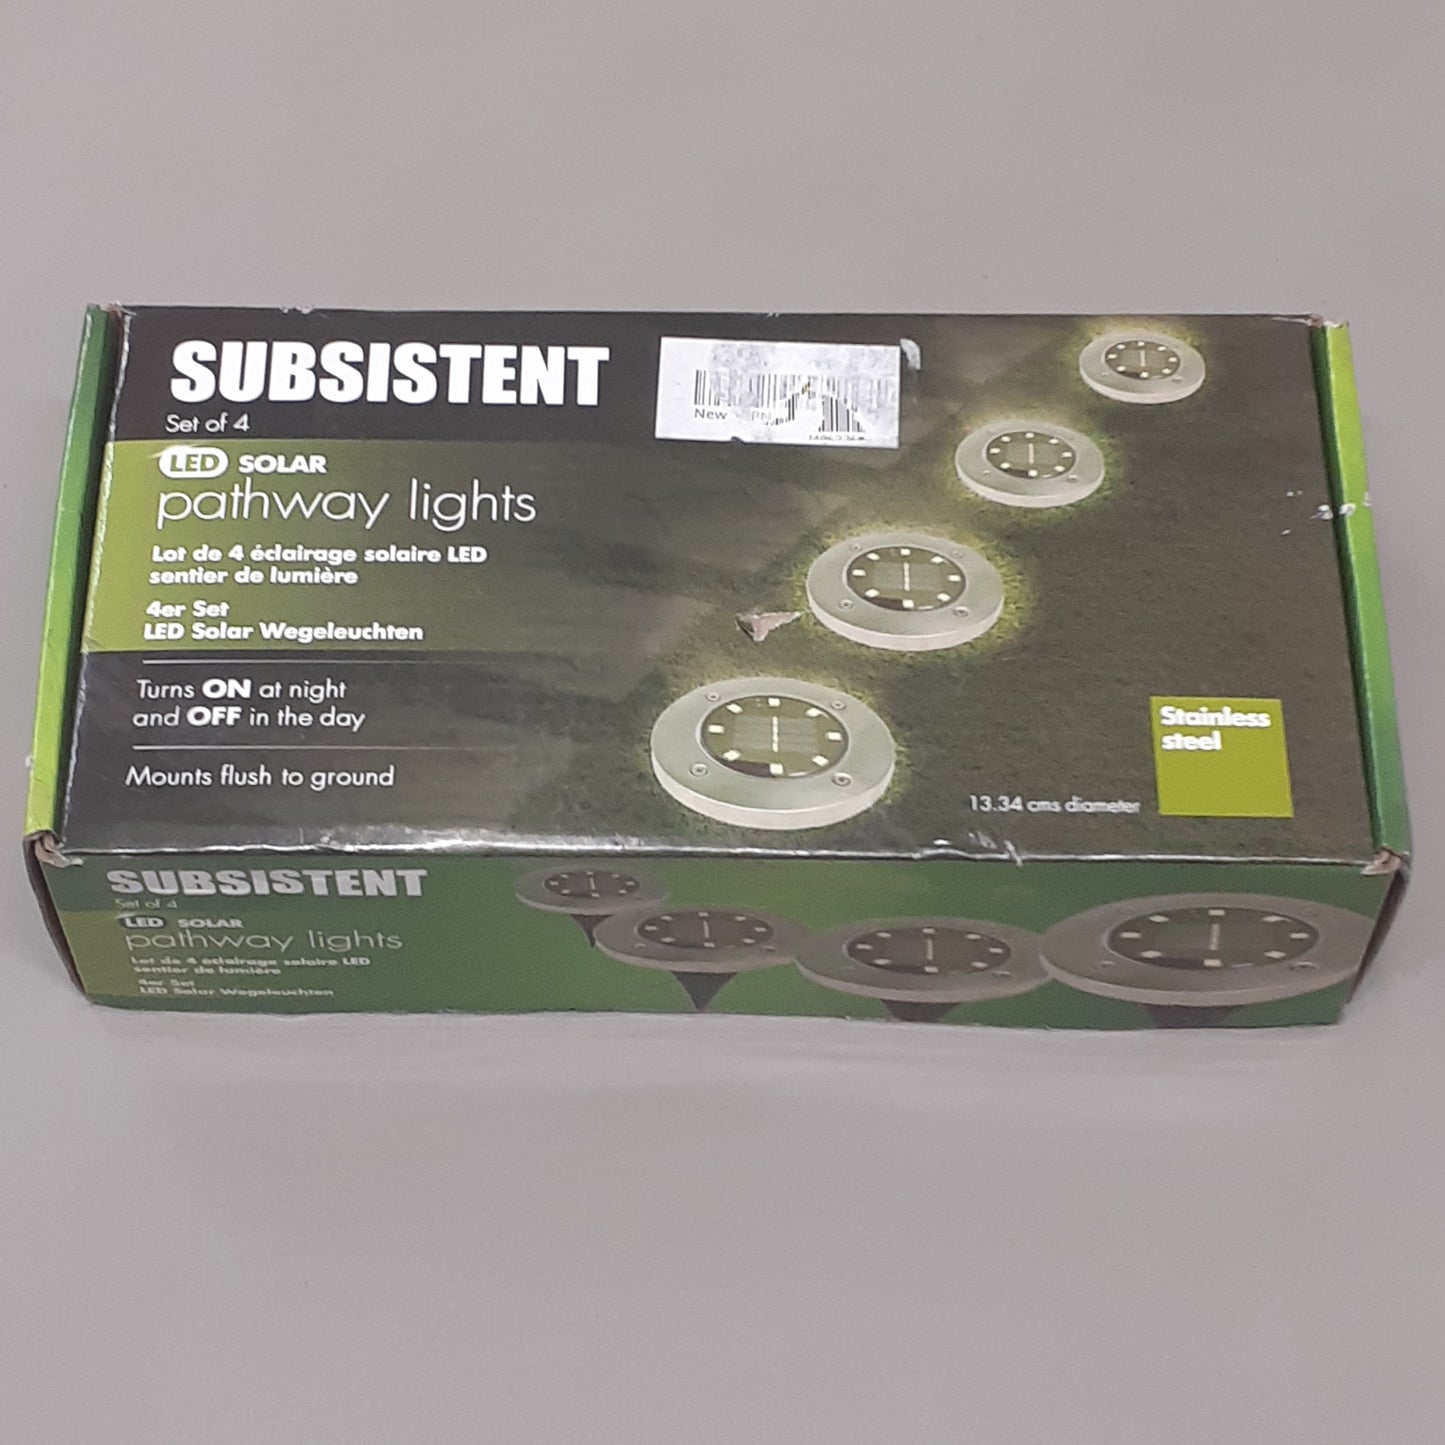 SUBSISTENT 4-Pk! LED Solar Pathway Lights (New)